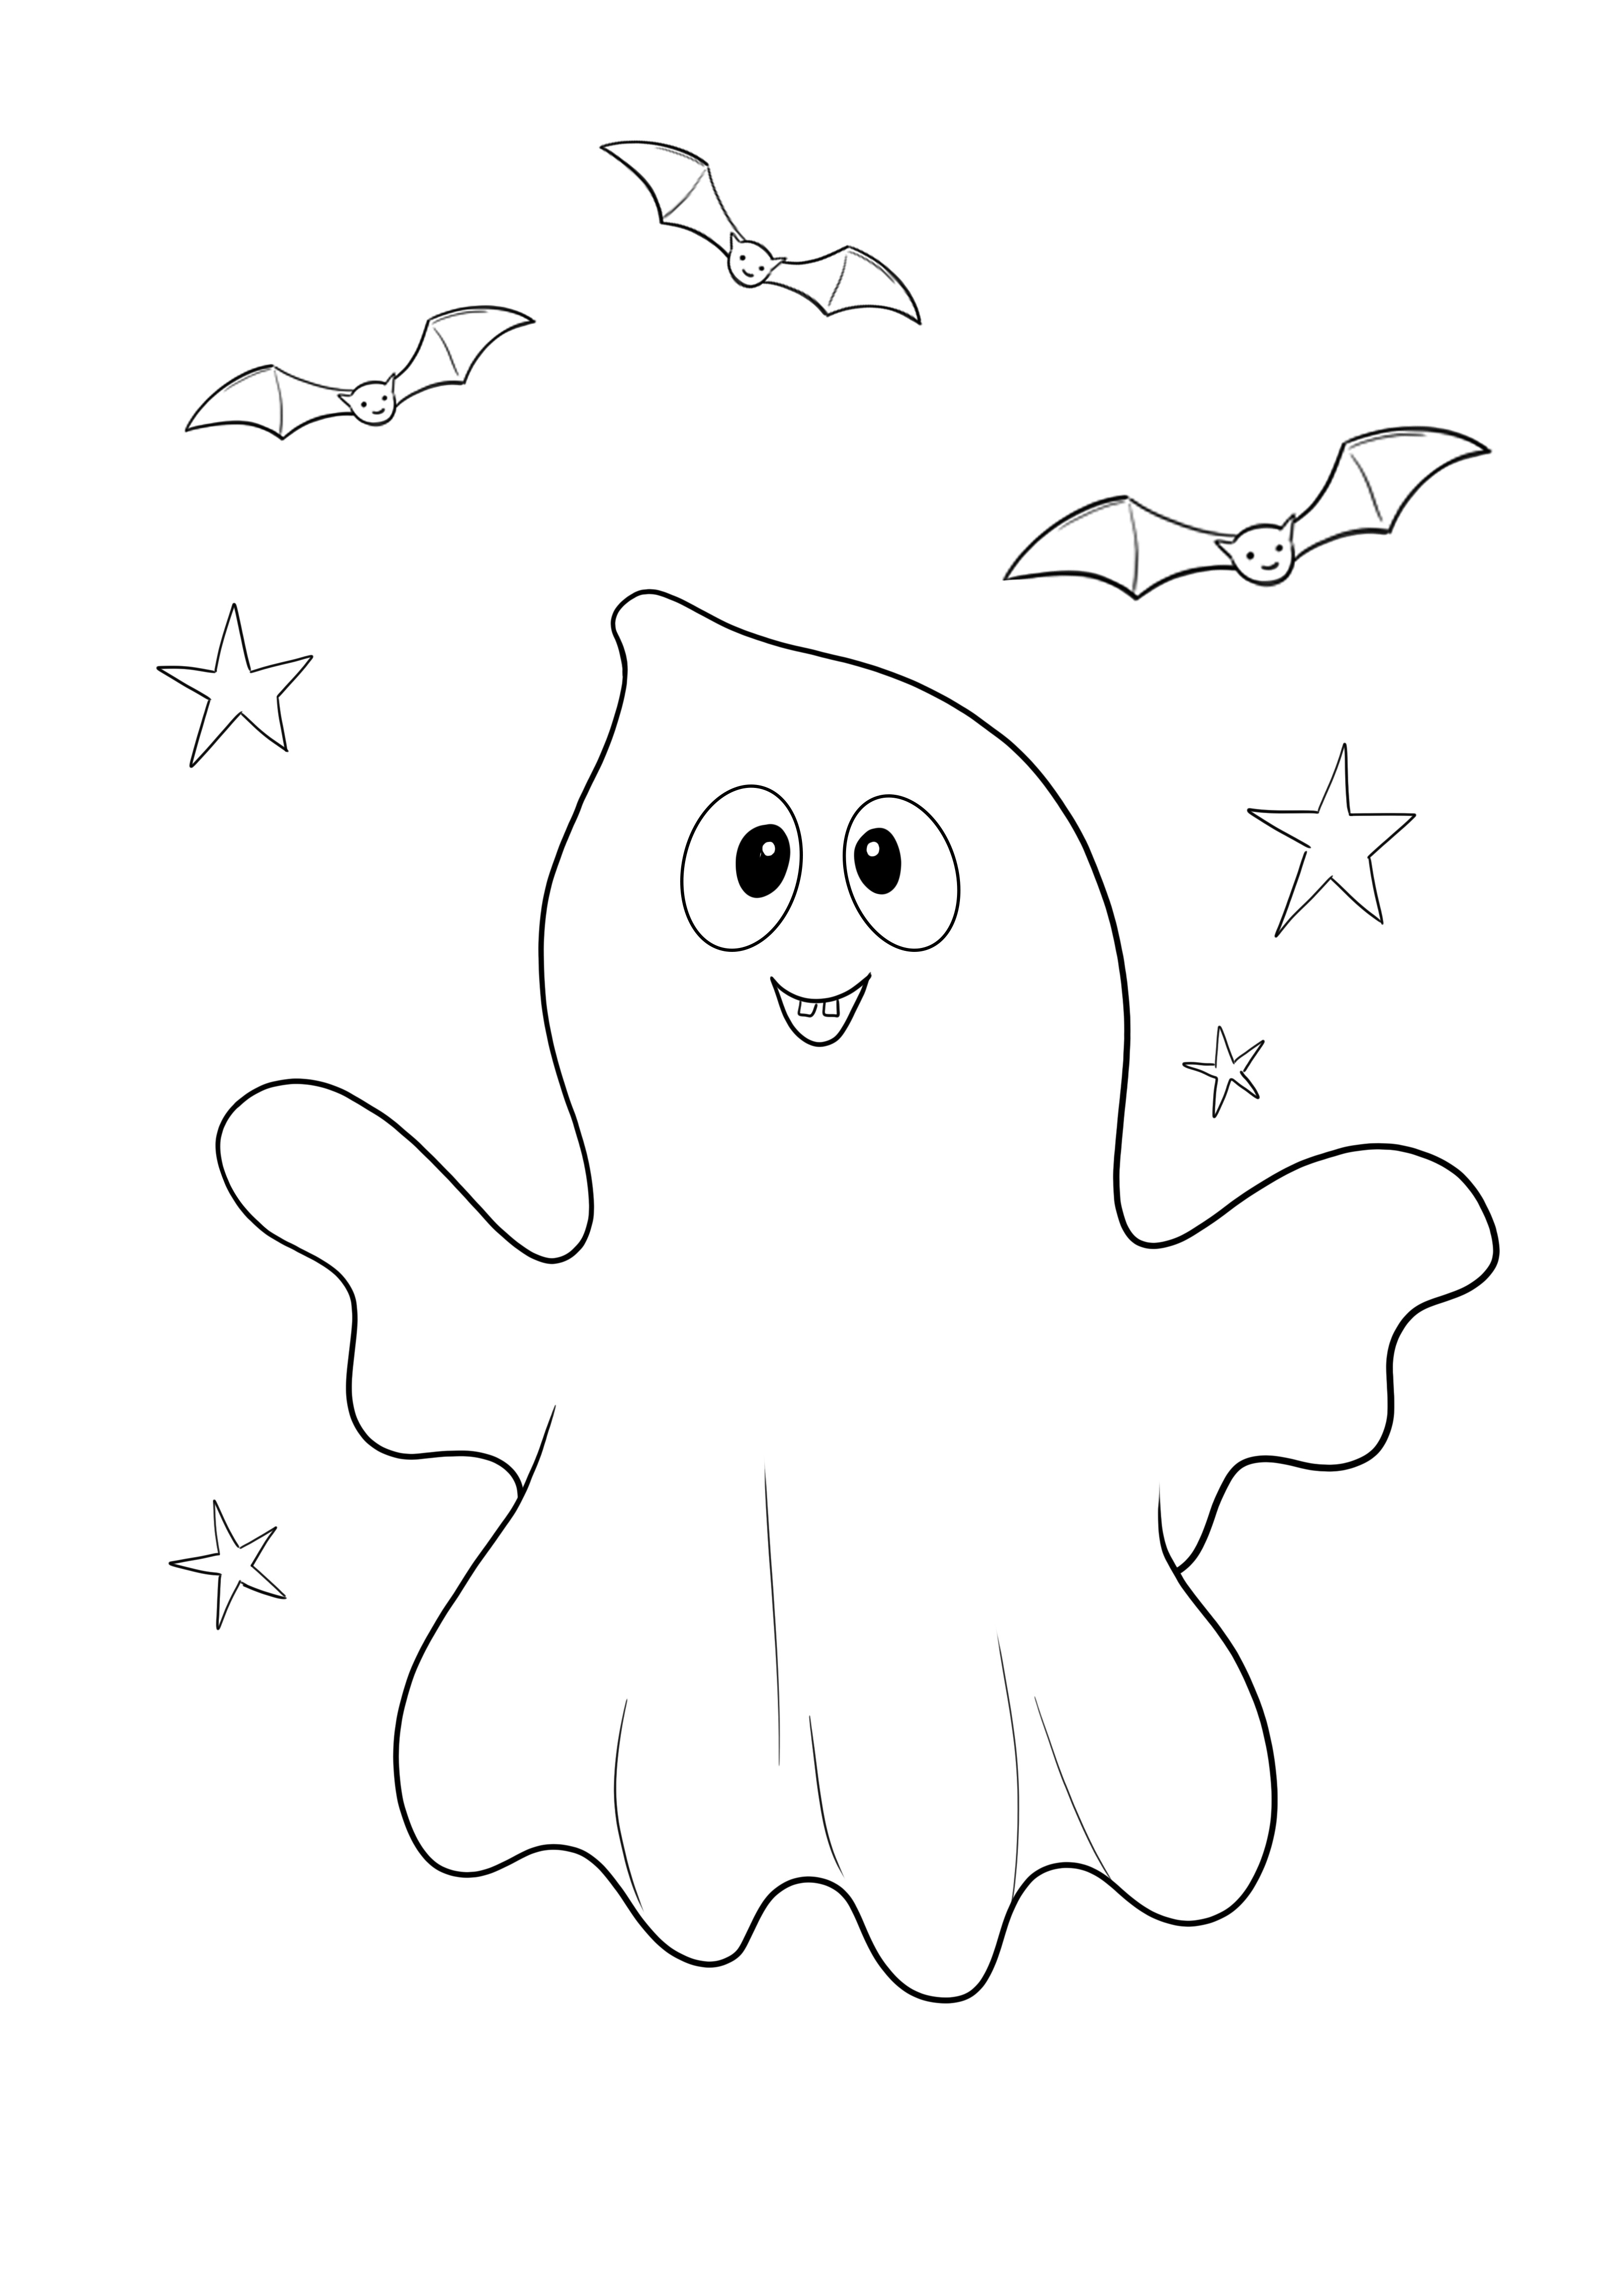 Immagine di celebrazione di fantasmi-Halloween carina per la stampa gratuita